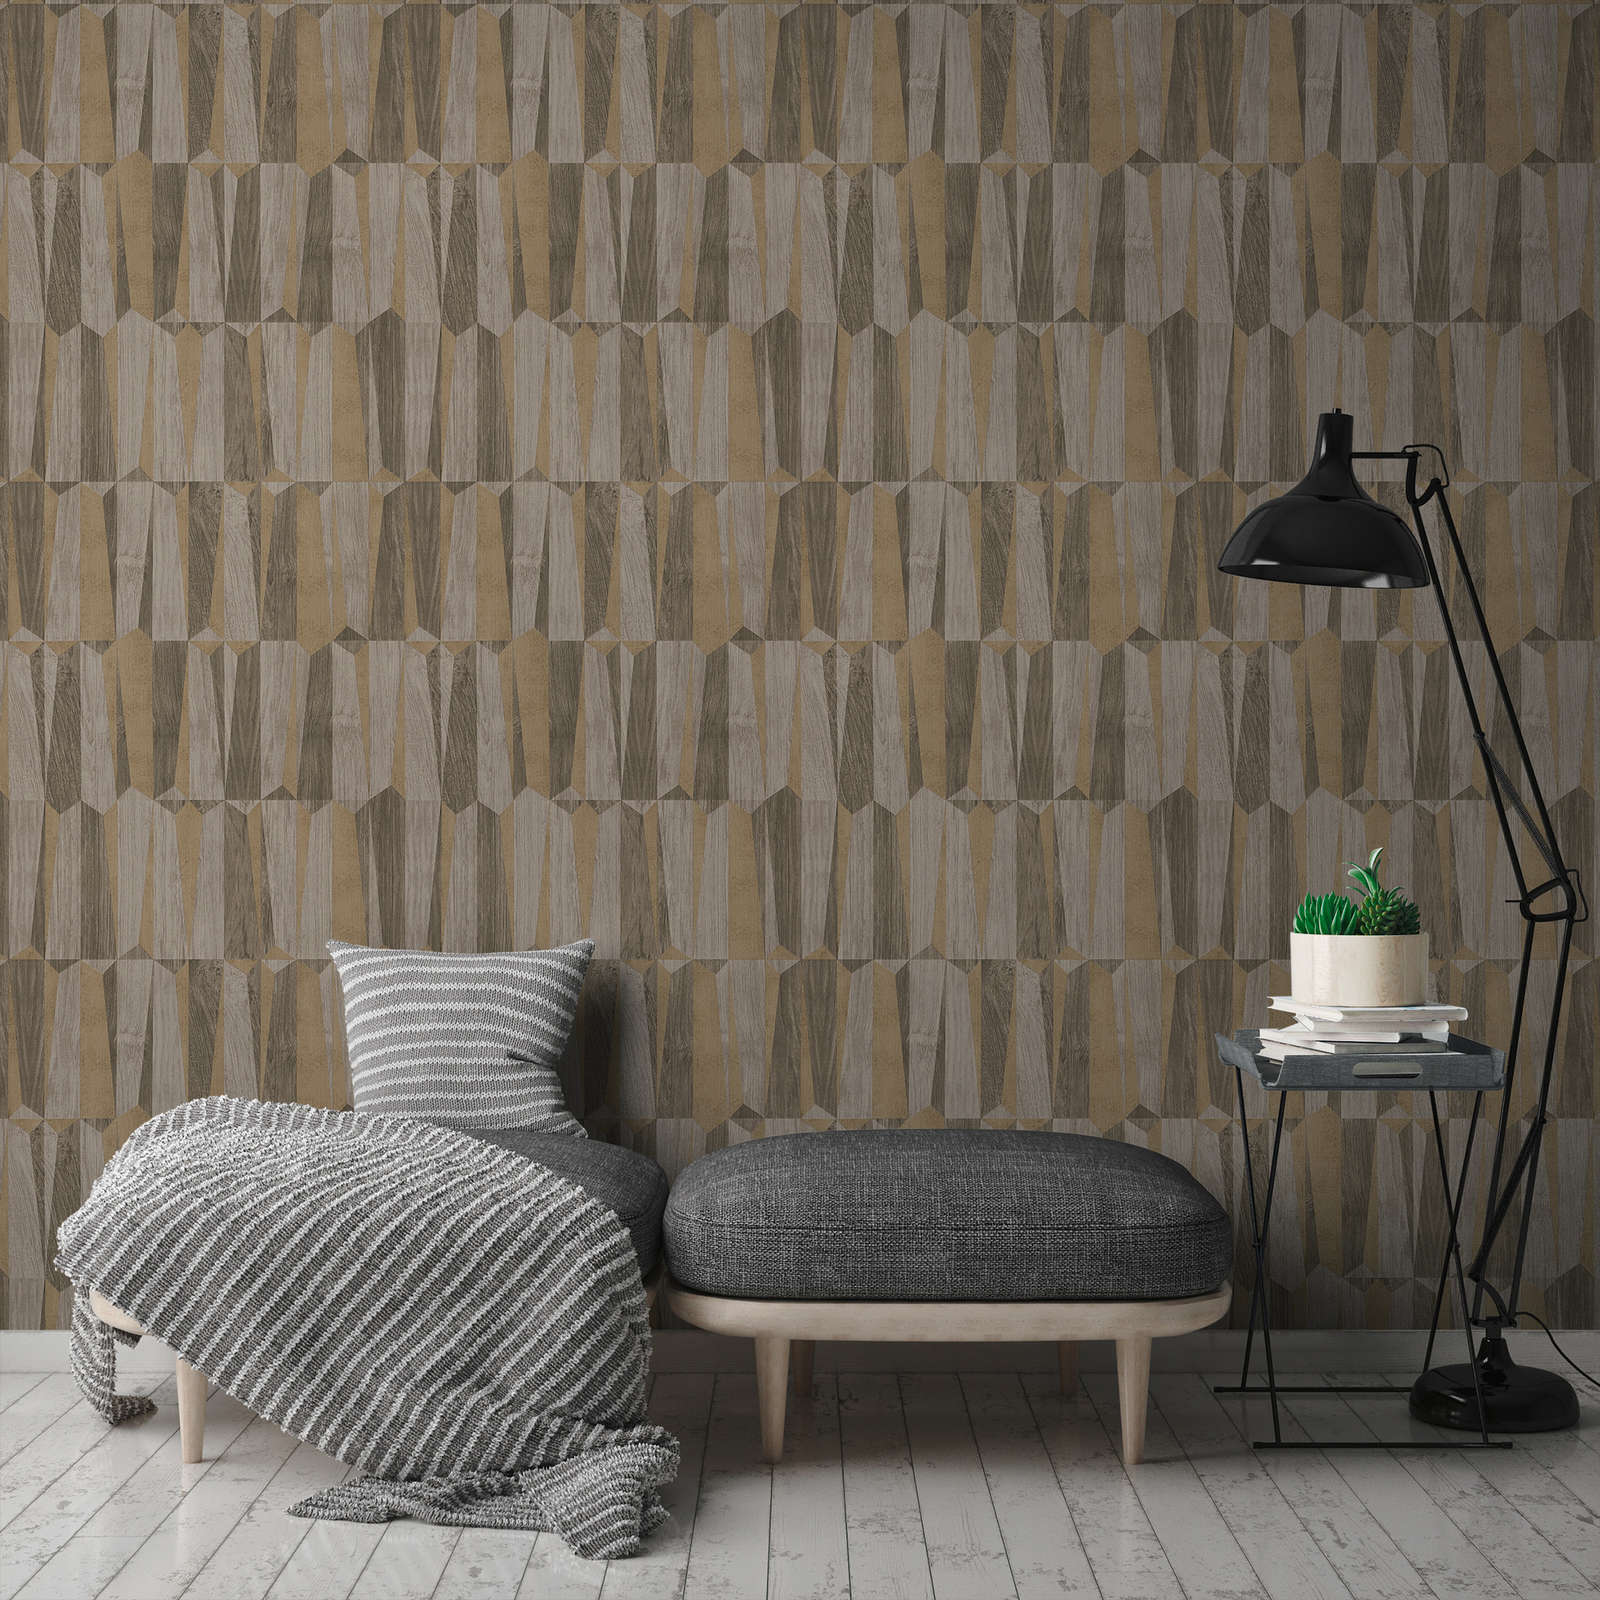             Ethno wallpaper with metallic & wood effect - brown, grey
        